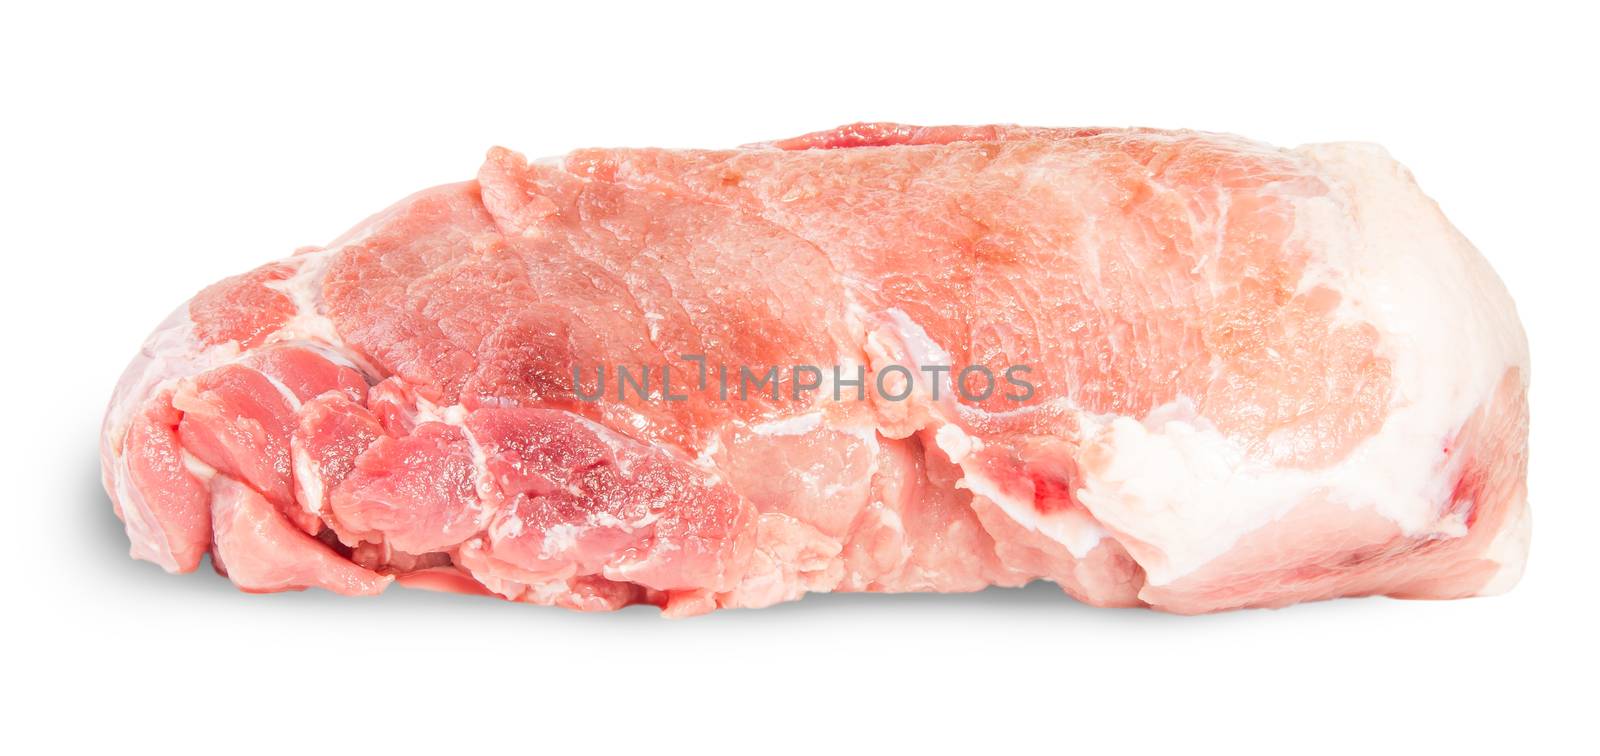 Raw Pork Fillet by Cipariss